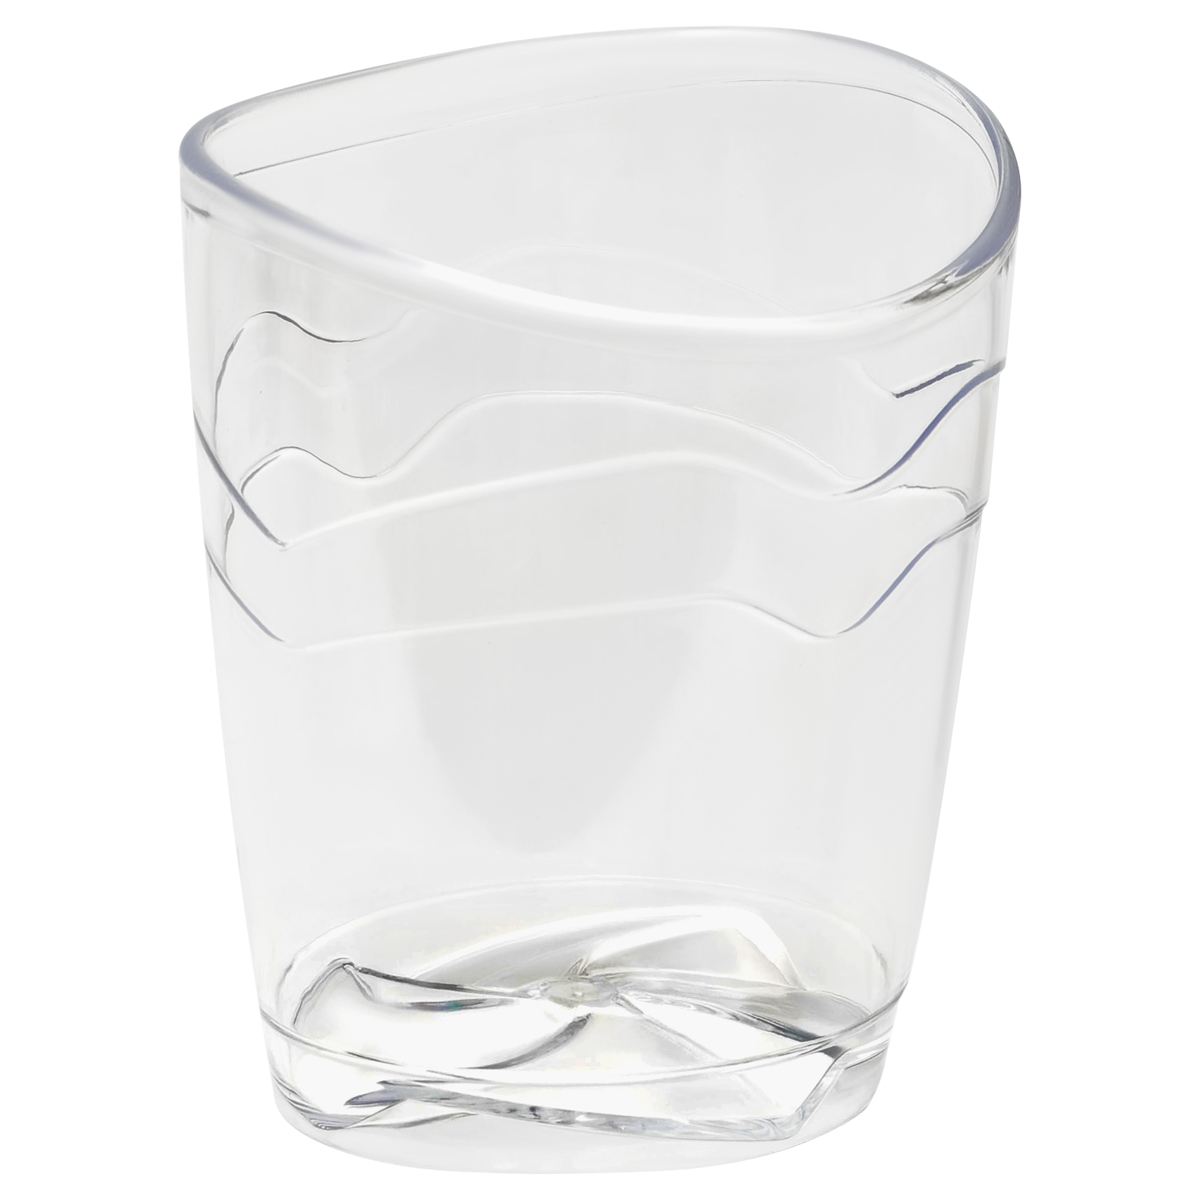 Подставка-стакан СТАММ "Вега", пластиковая, овальная, прозрачная